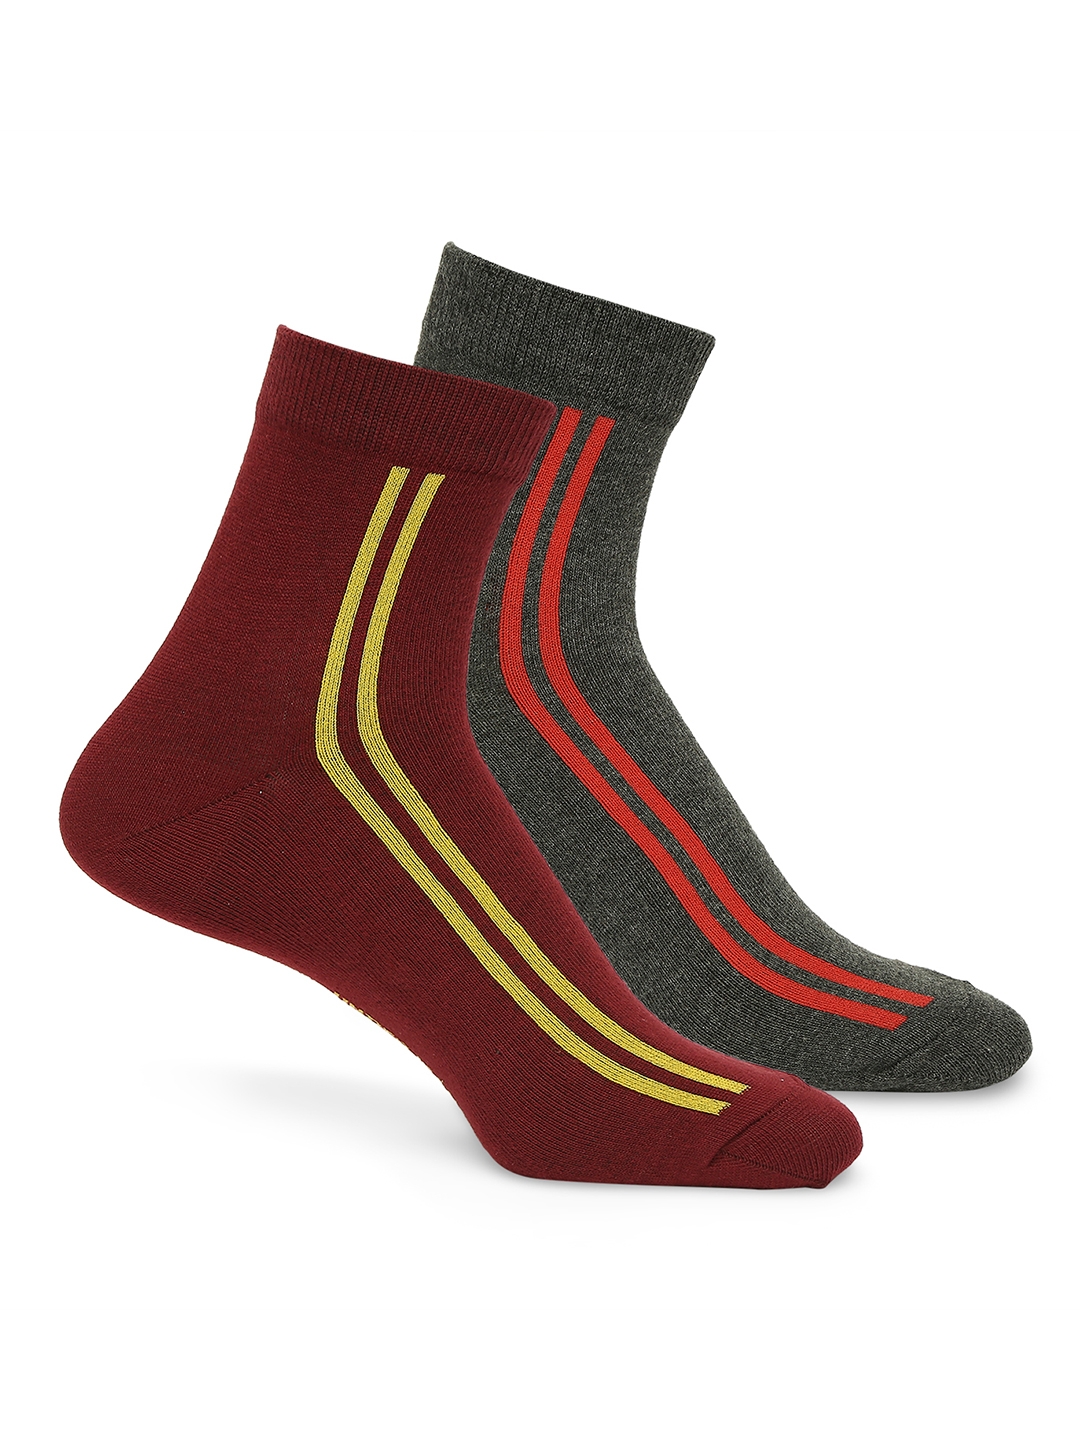 Underjeans by Spykar Premium Maroon & Anthra Melange Ankle Length Socks - Pack Of 2